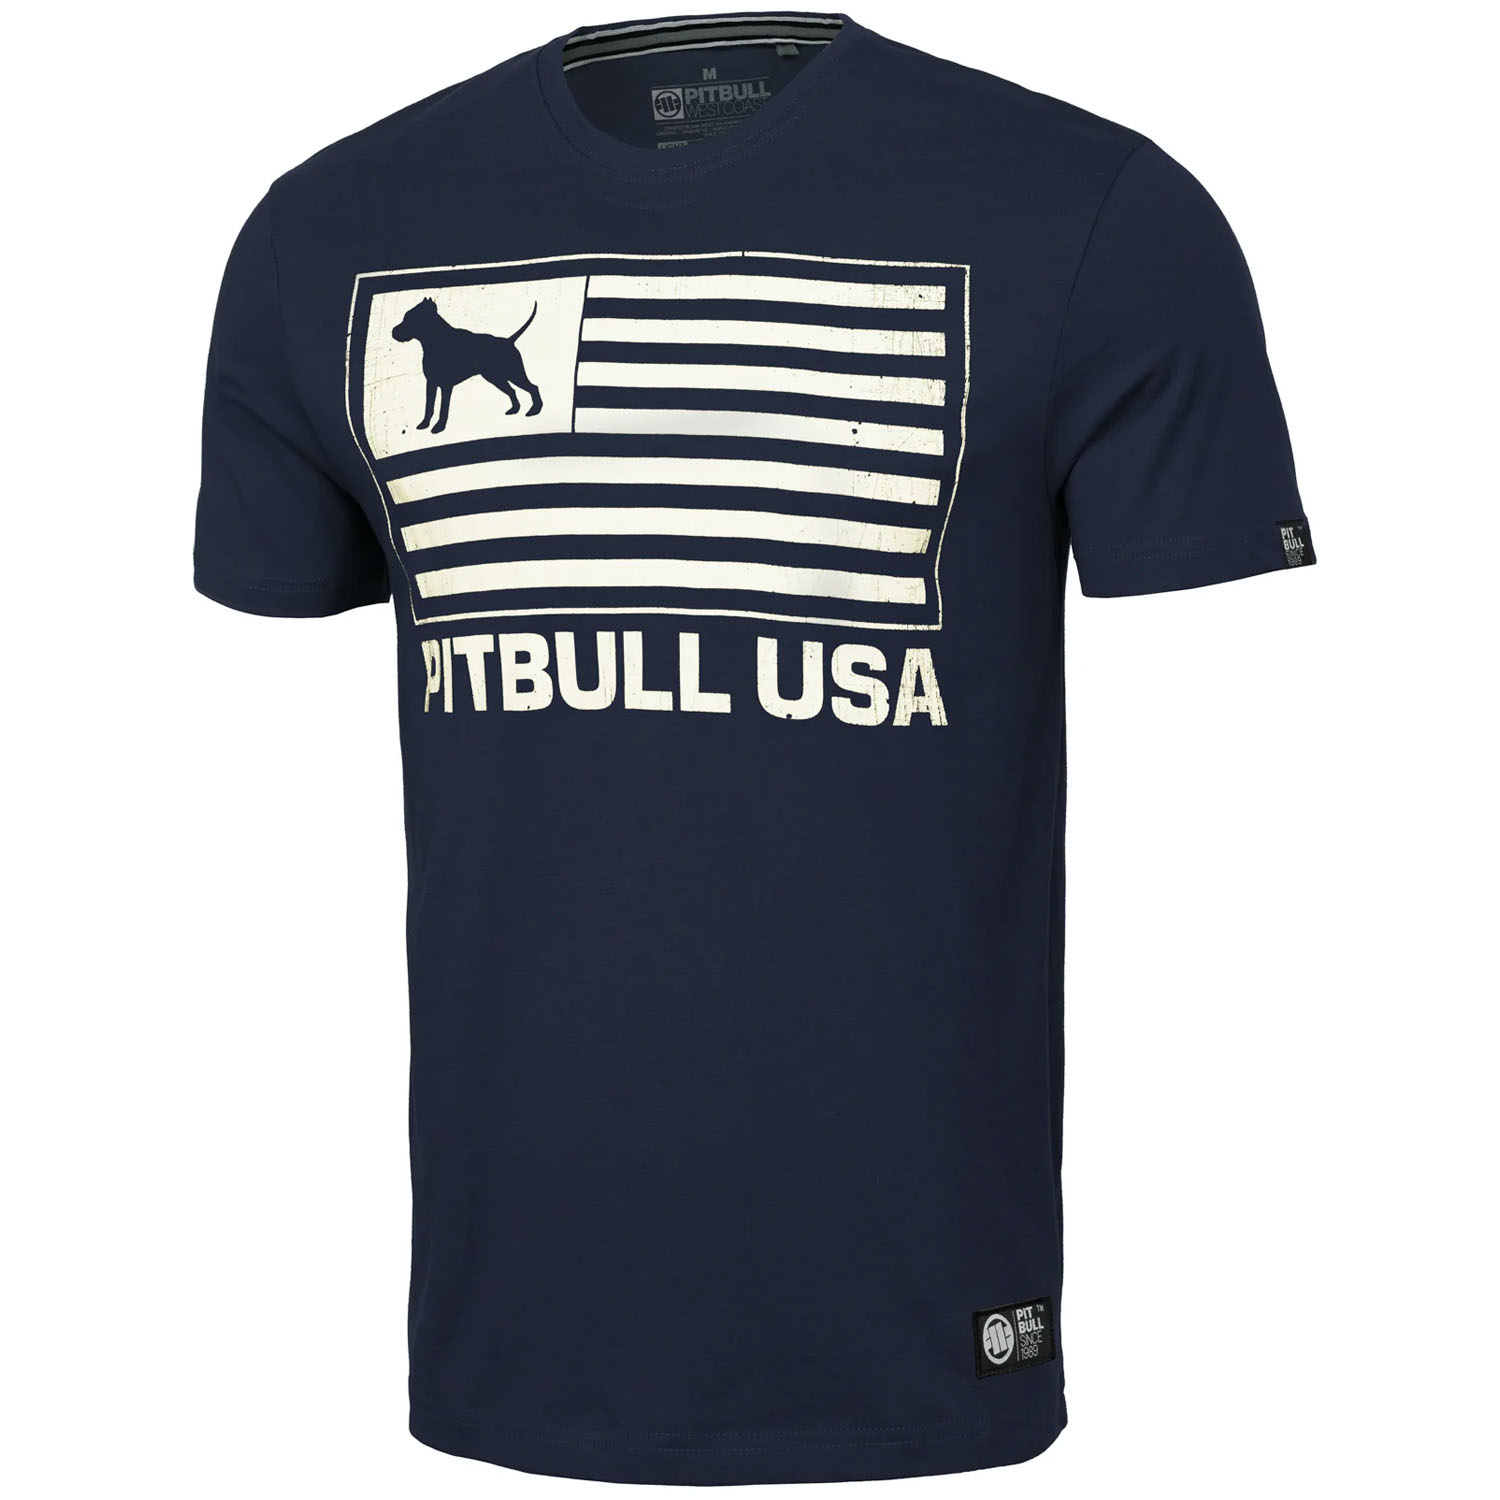 Pit Bull West Coast T-Shirt, USA, navy